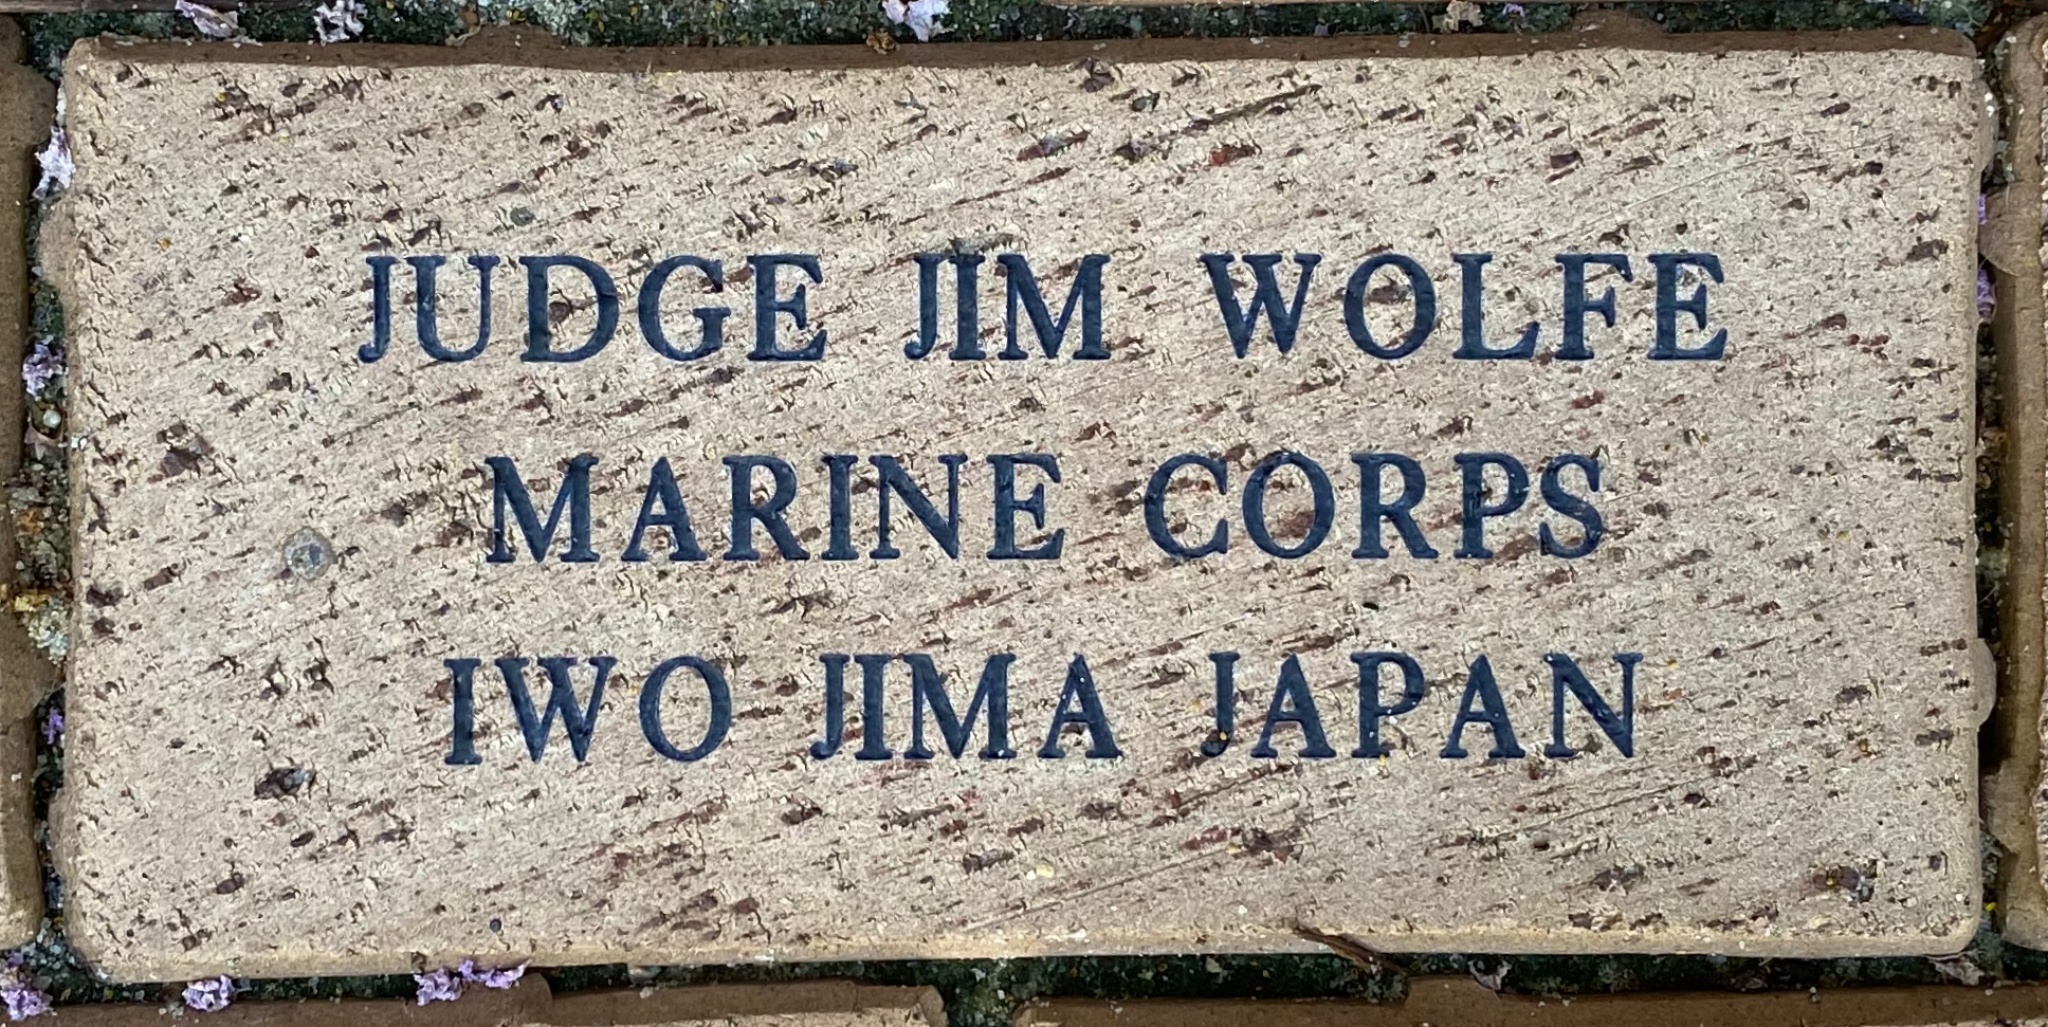 JUDGE JIM WOLFE MARINE CORPS IWO JIMA JAPAN